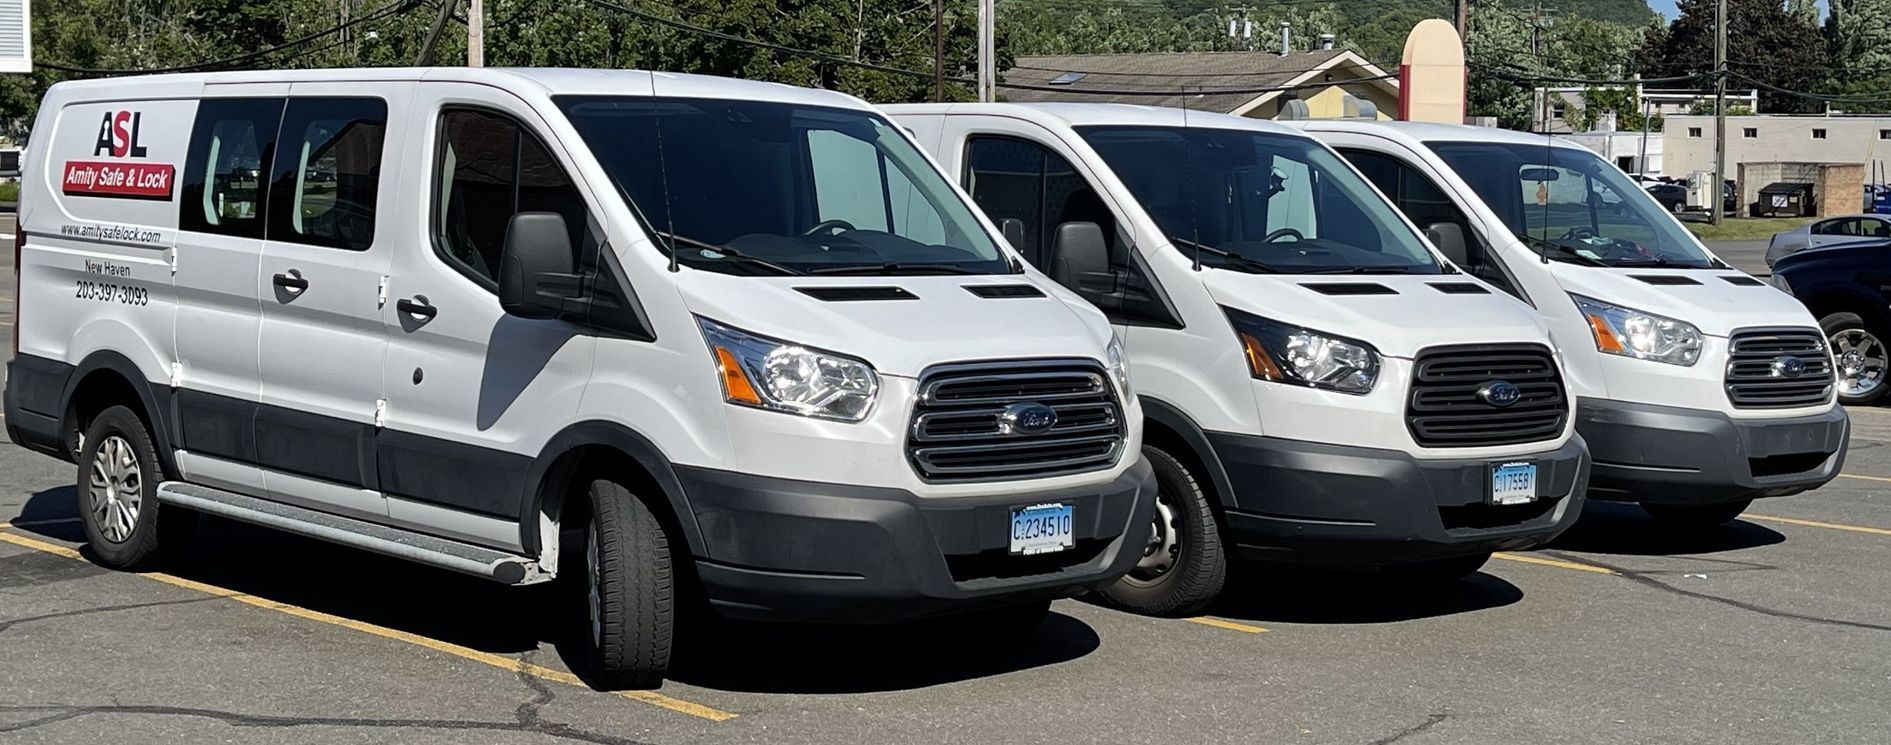 Car Parking — Woodbridge, CT — Amity Safe & Lock